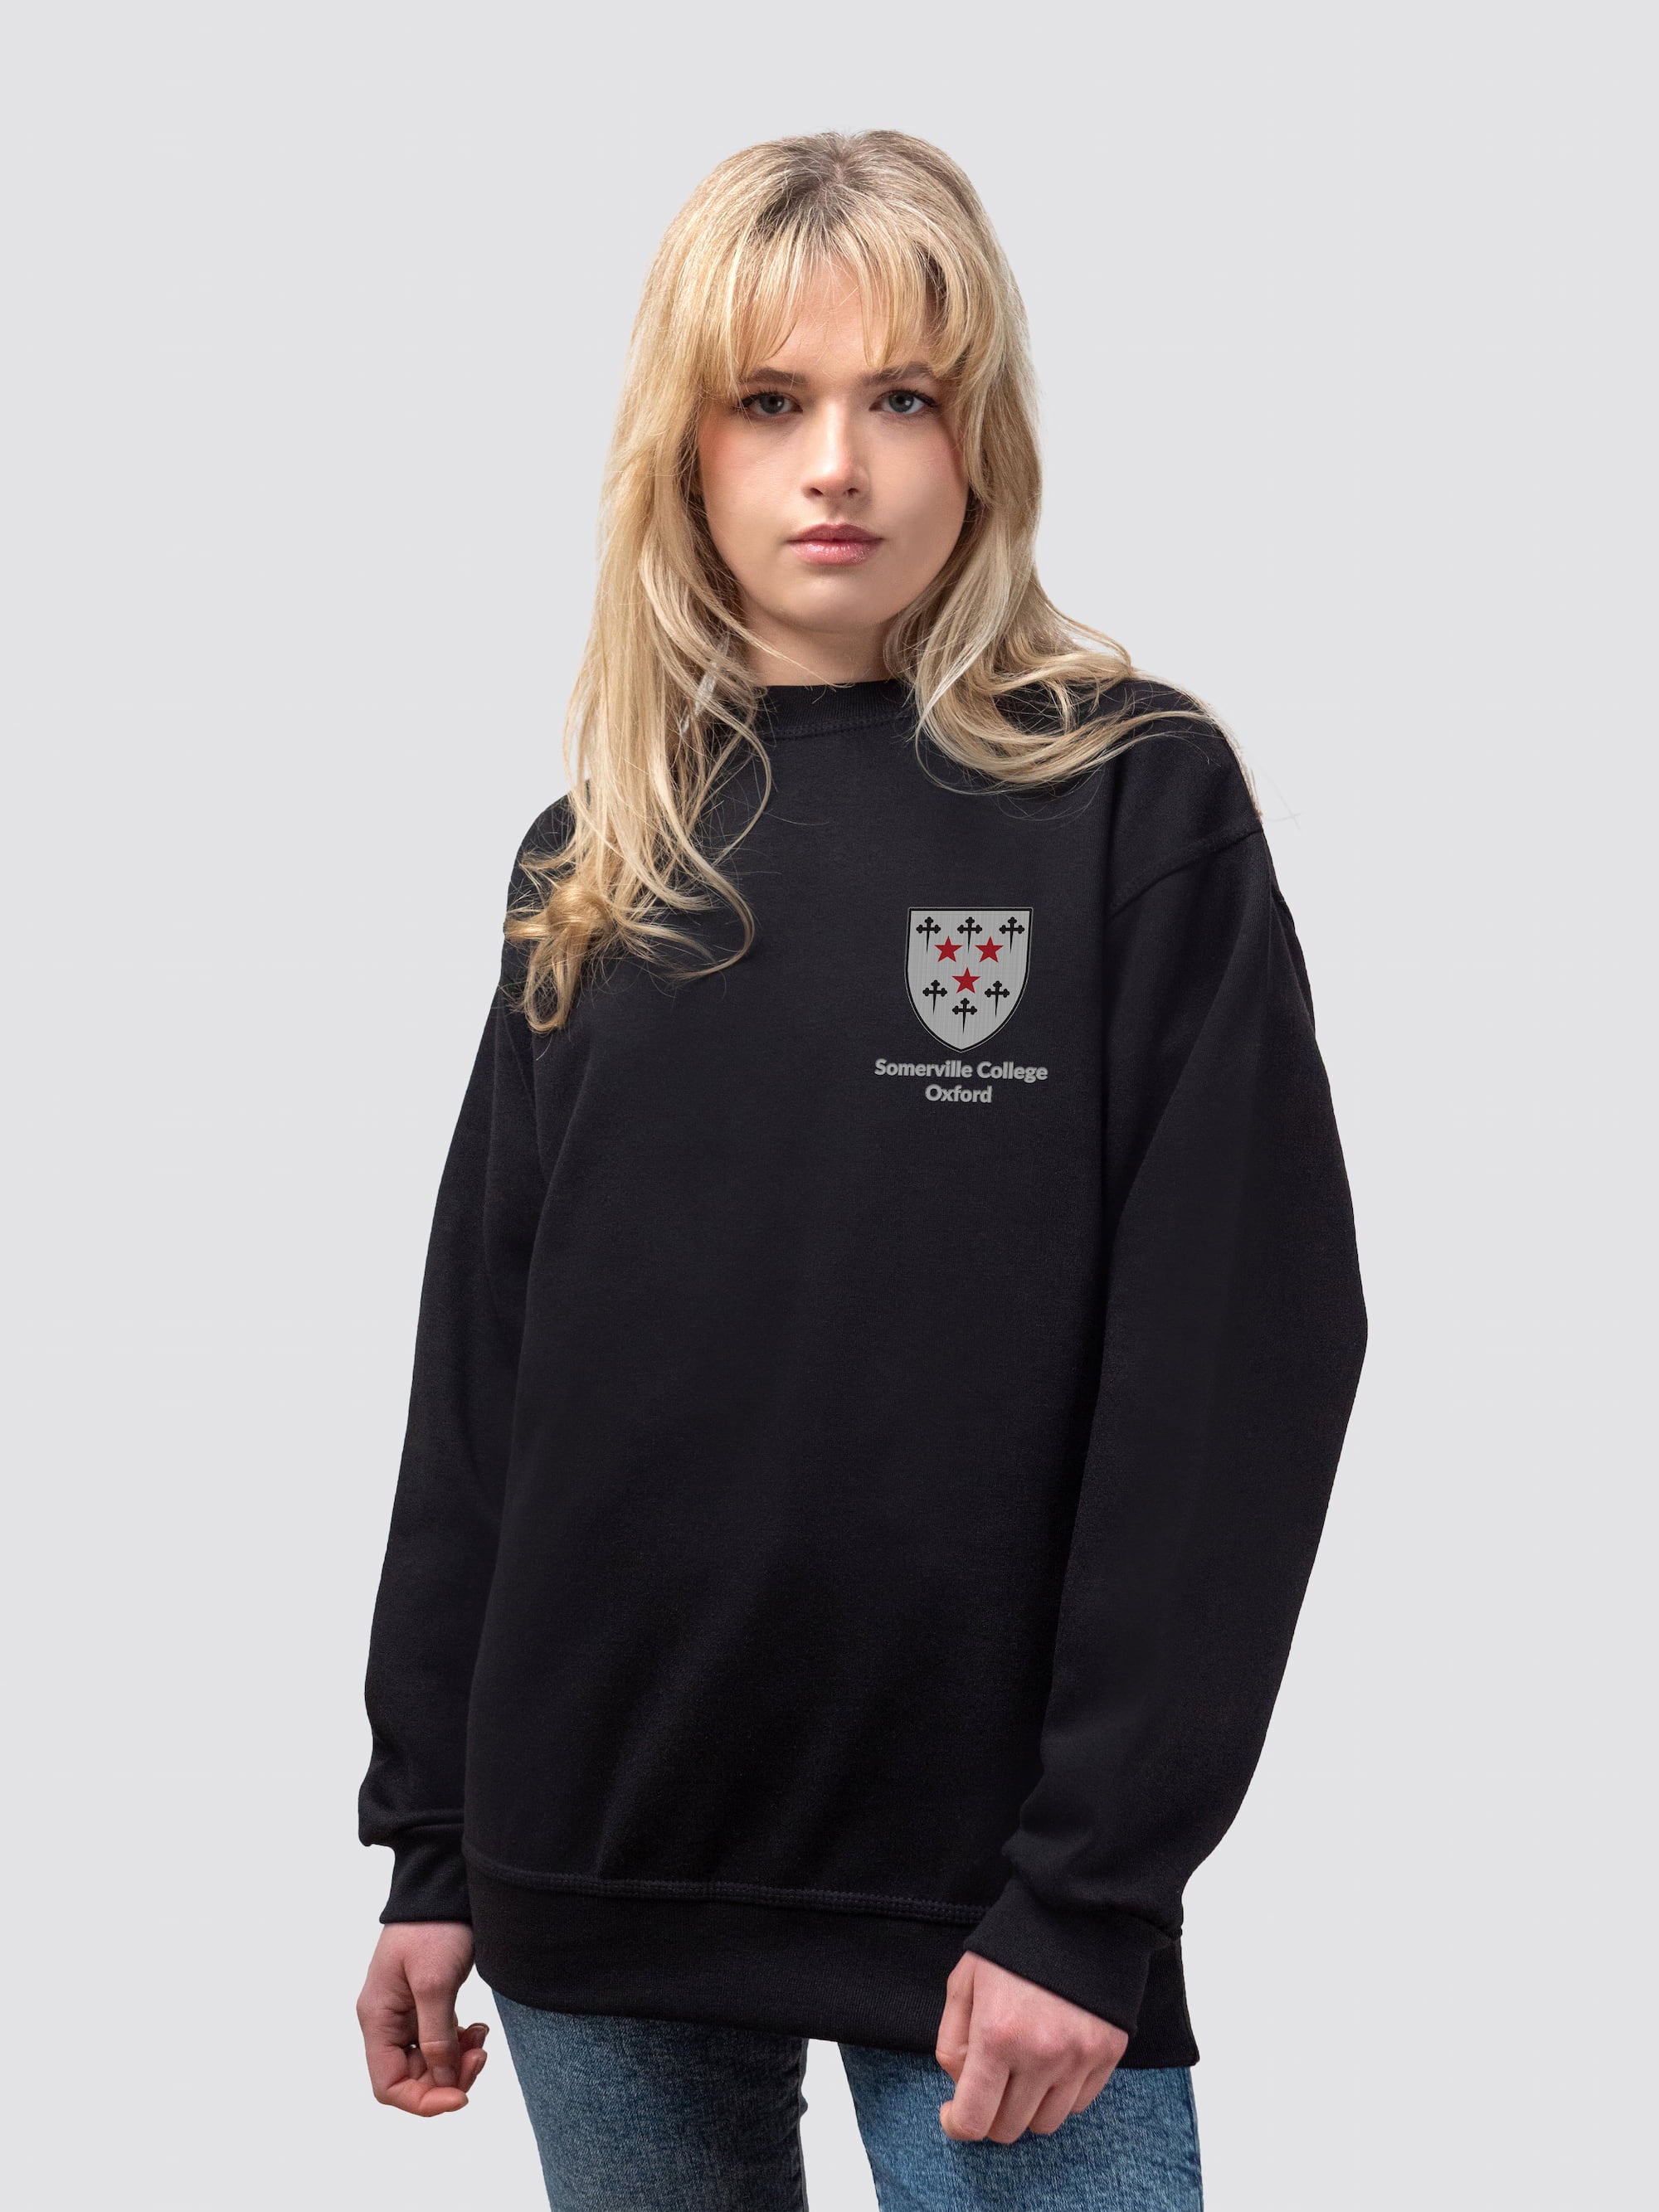 Somerville crest on the front of a black, crew-neck sweatshirt